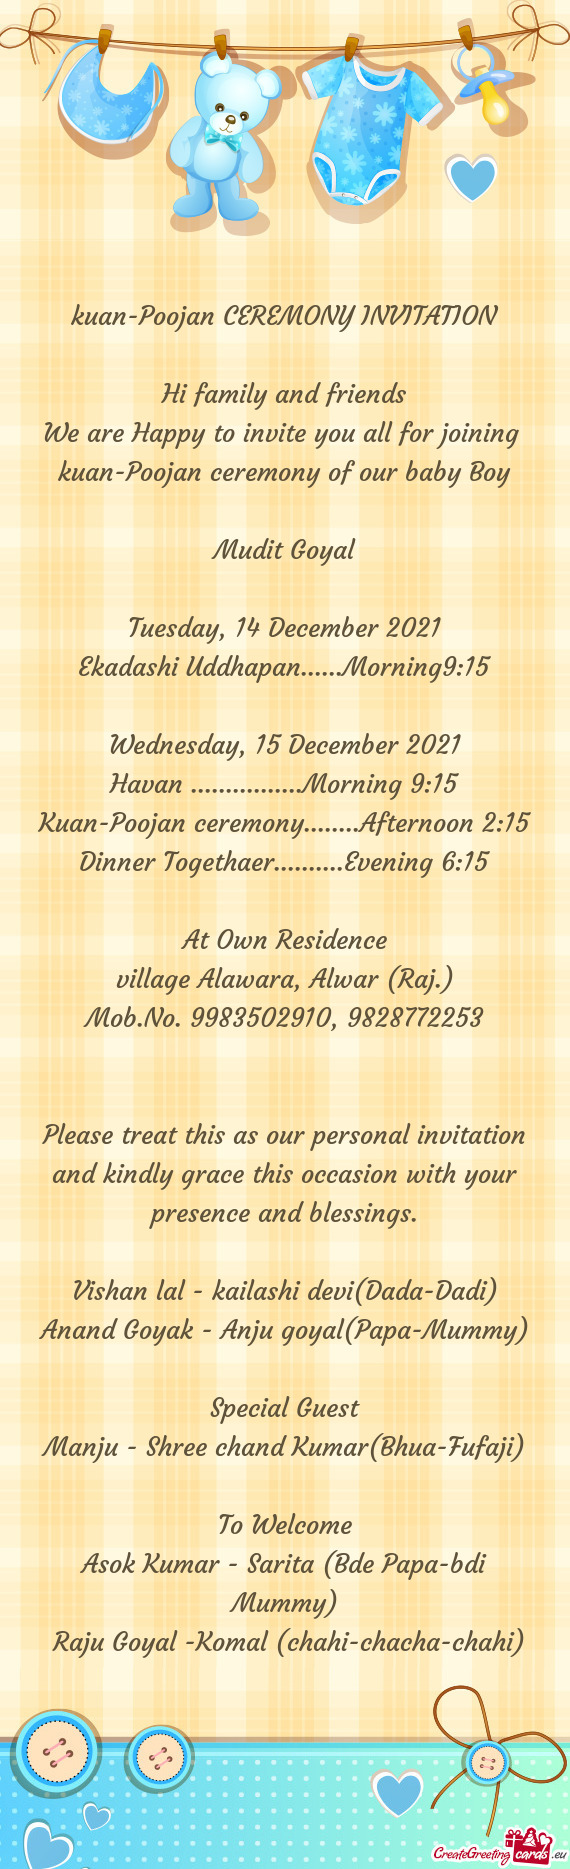 Kuan-Poojan CEREMONY INVITATION